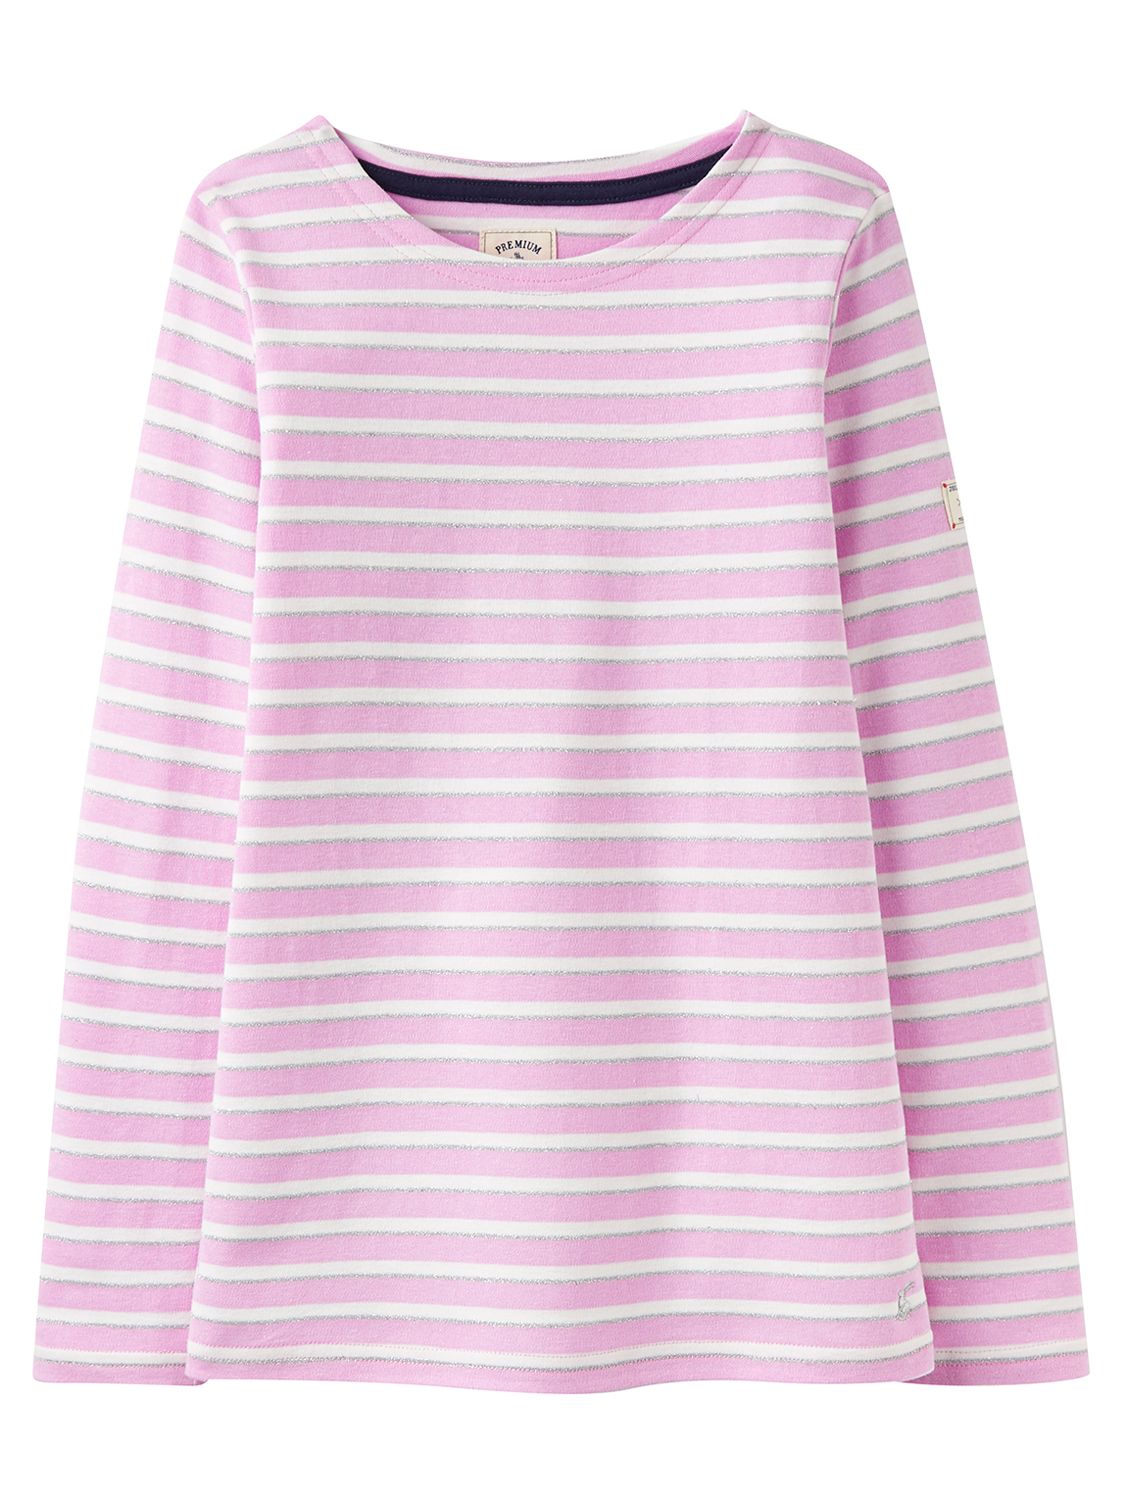 Little Joule Girls' Harbour Stripe T-Shirt, Pink